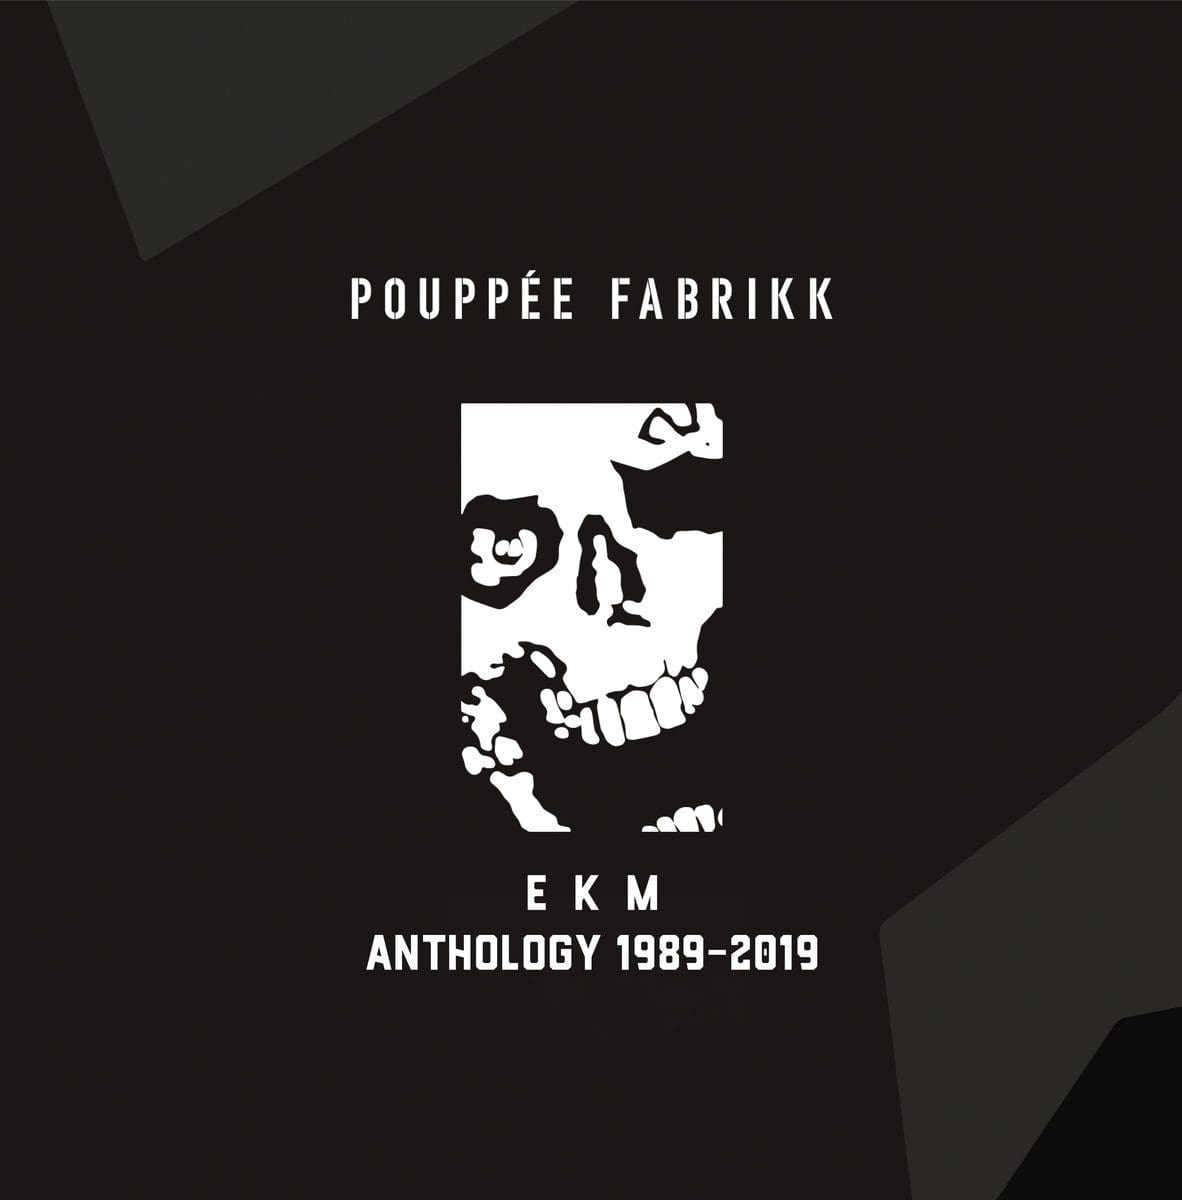 Pouppée Fabrikk returns with massive 6CD boxset anthology incl. 42 exclusive tracks